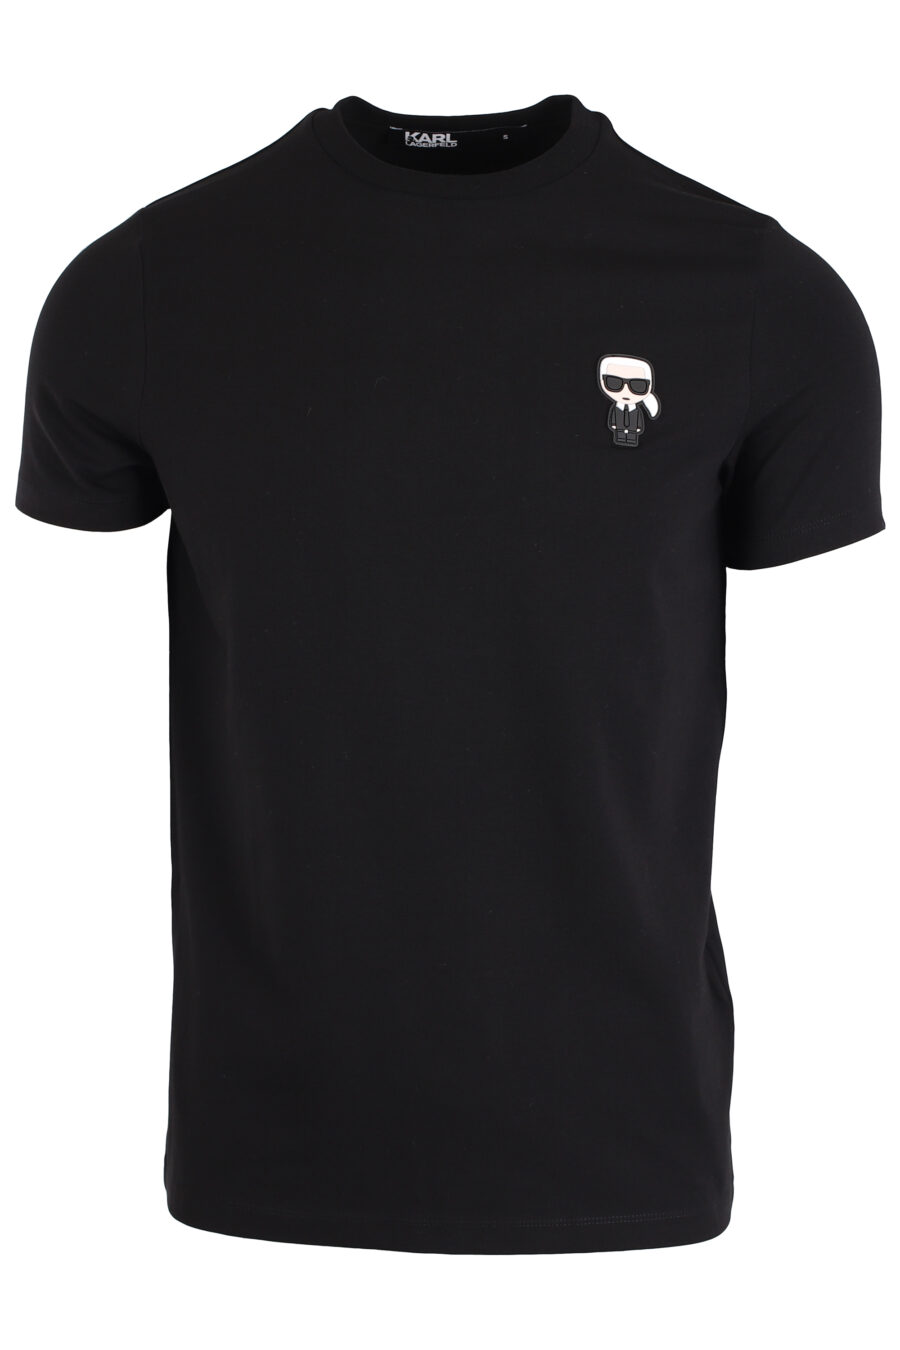 Black T-shirt with "ikonik" logo - IMG 3976